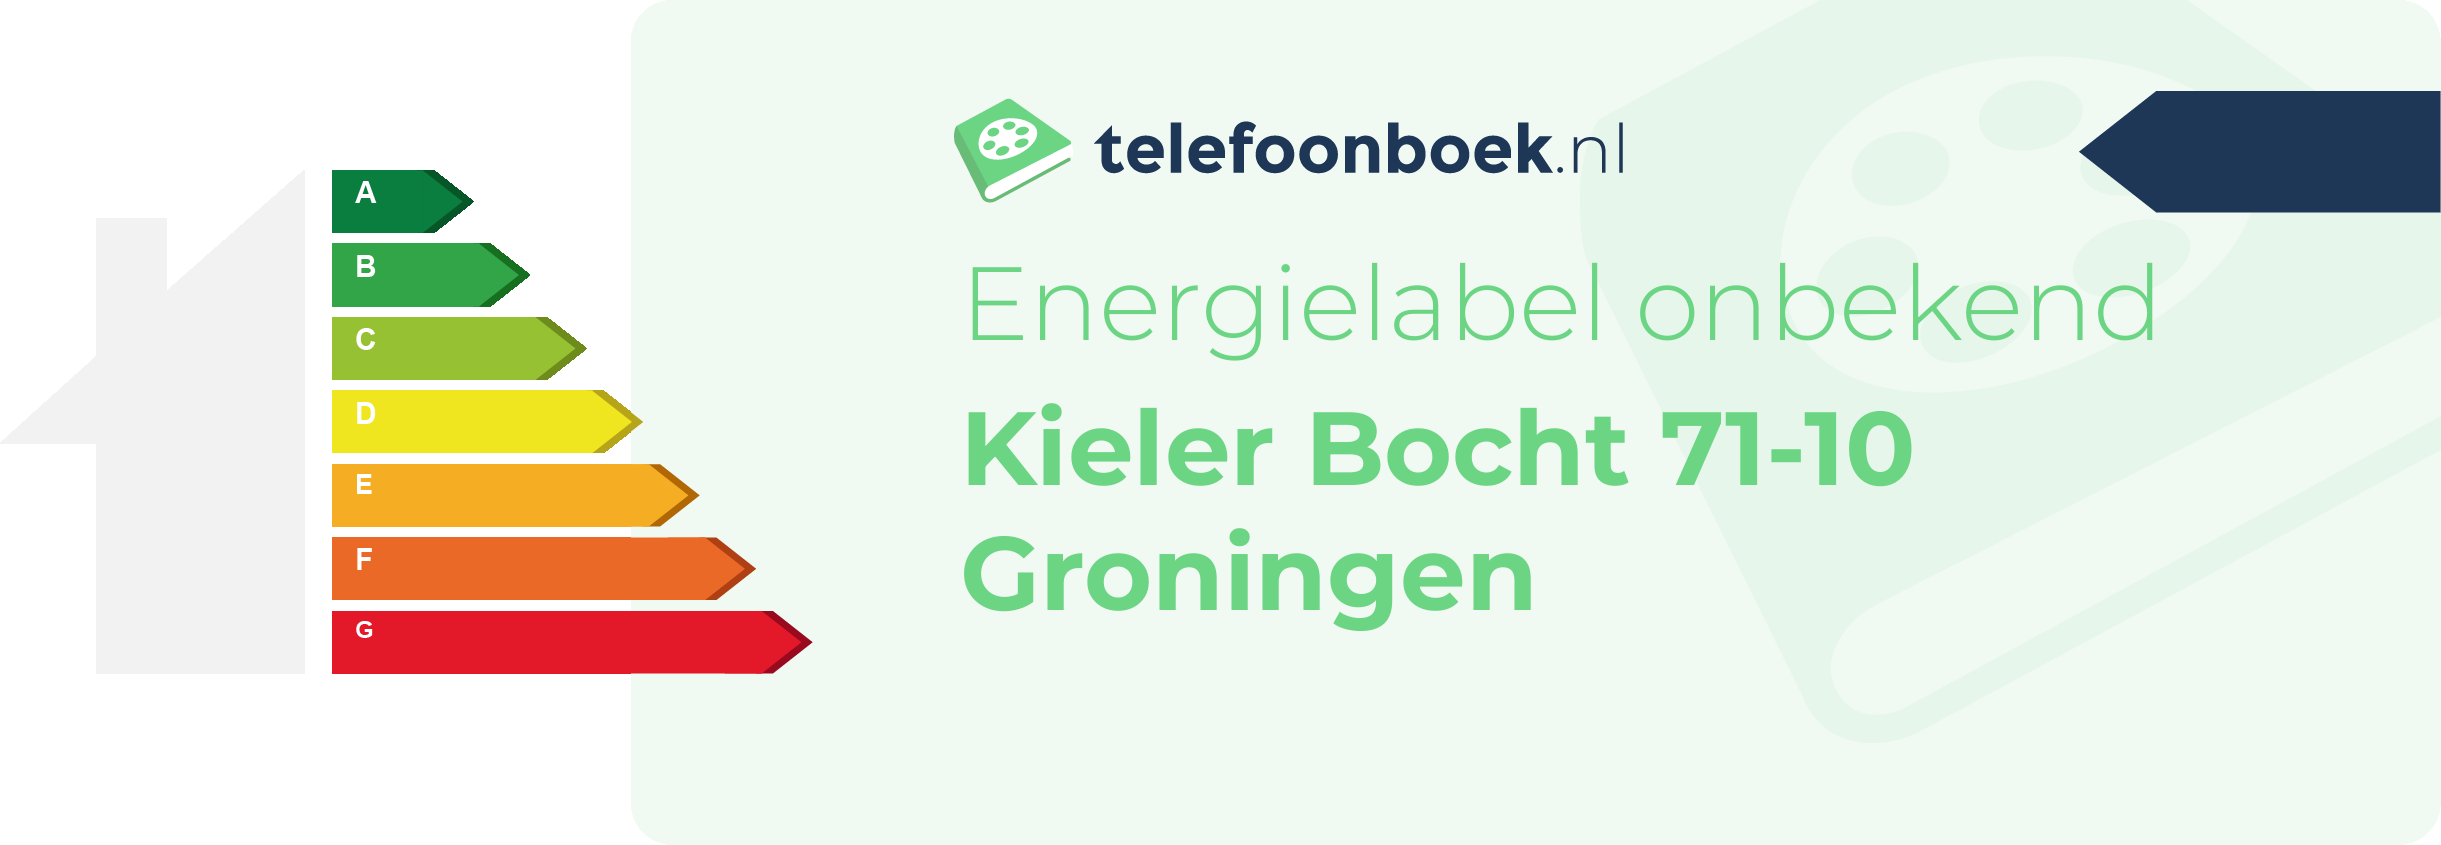 Energielabel Kieler Bocht 71-10 Groningen